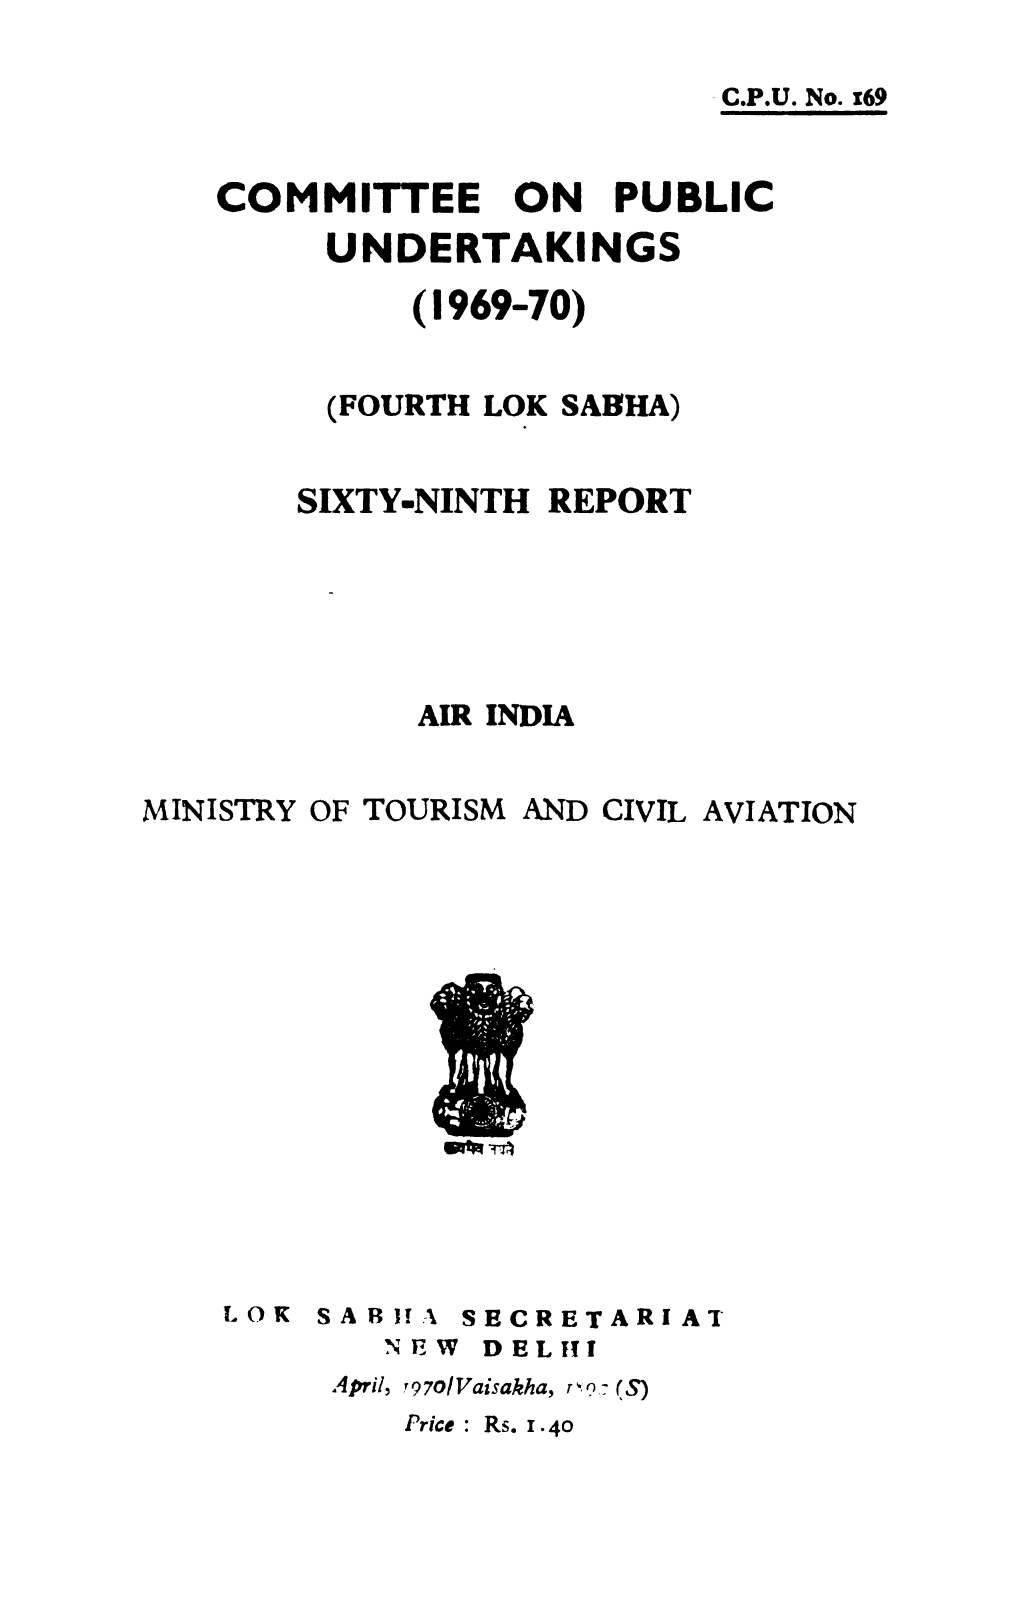 Committee on Public Undertakings (1969-70)